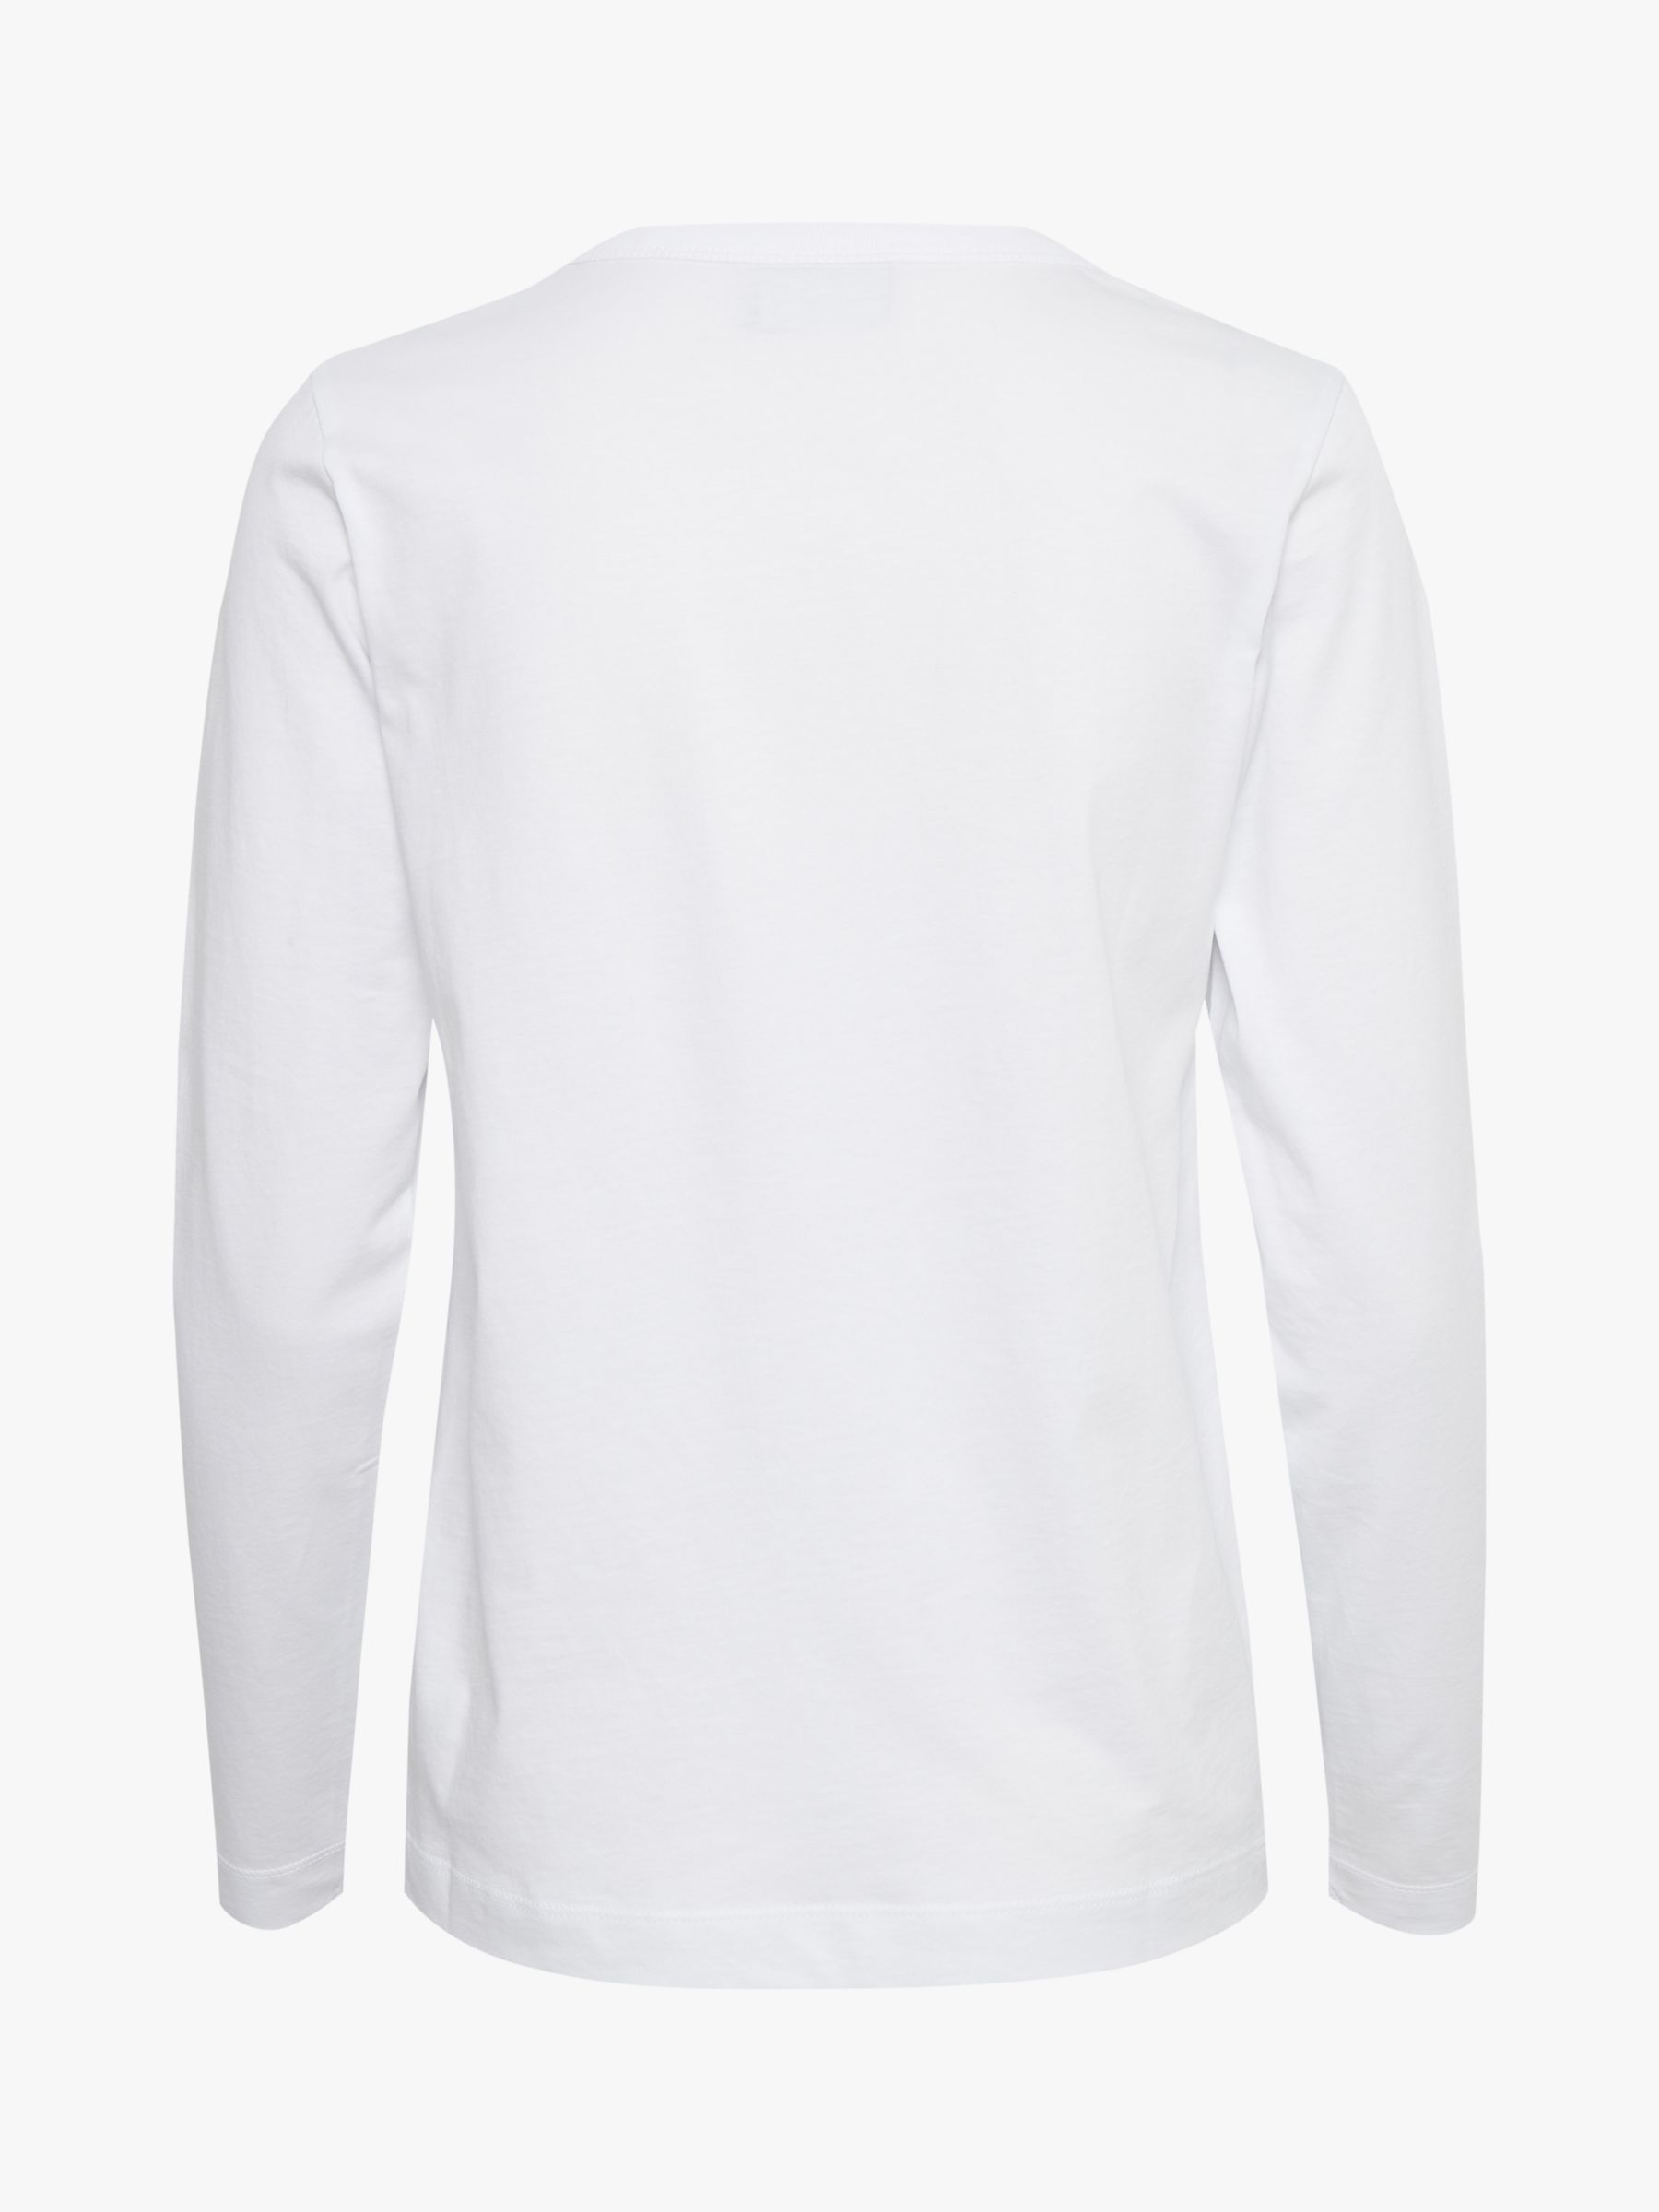 KAFFE Marin Long Sleeve Top, Optical White at John Lewis & Partners